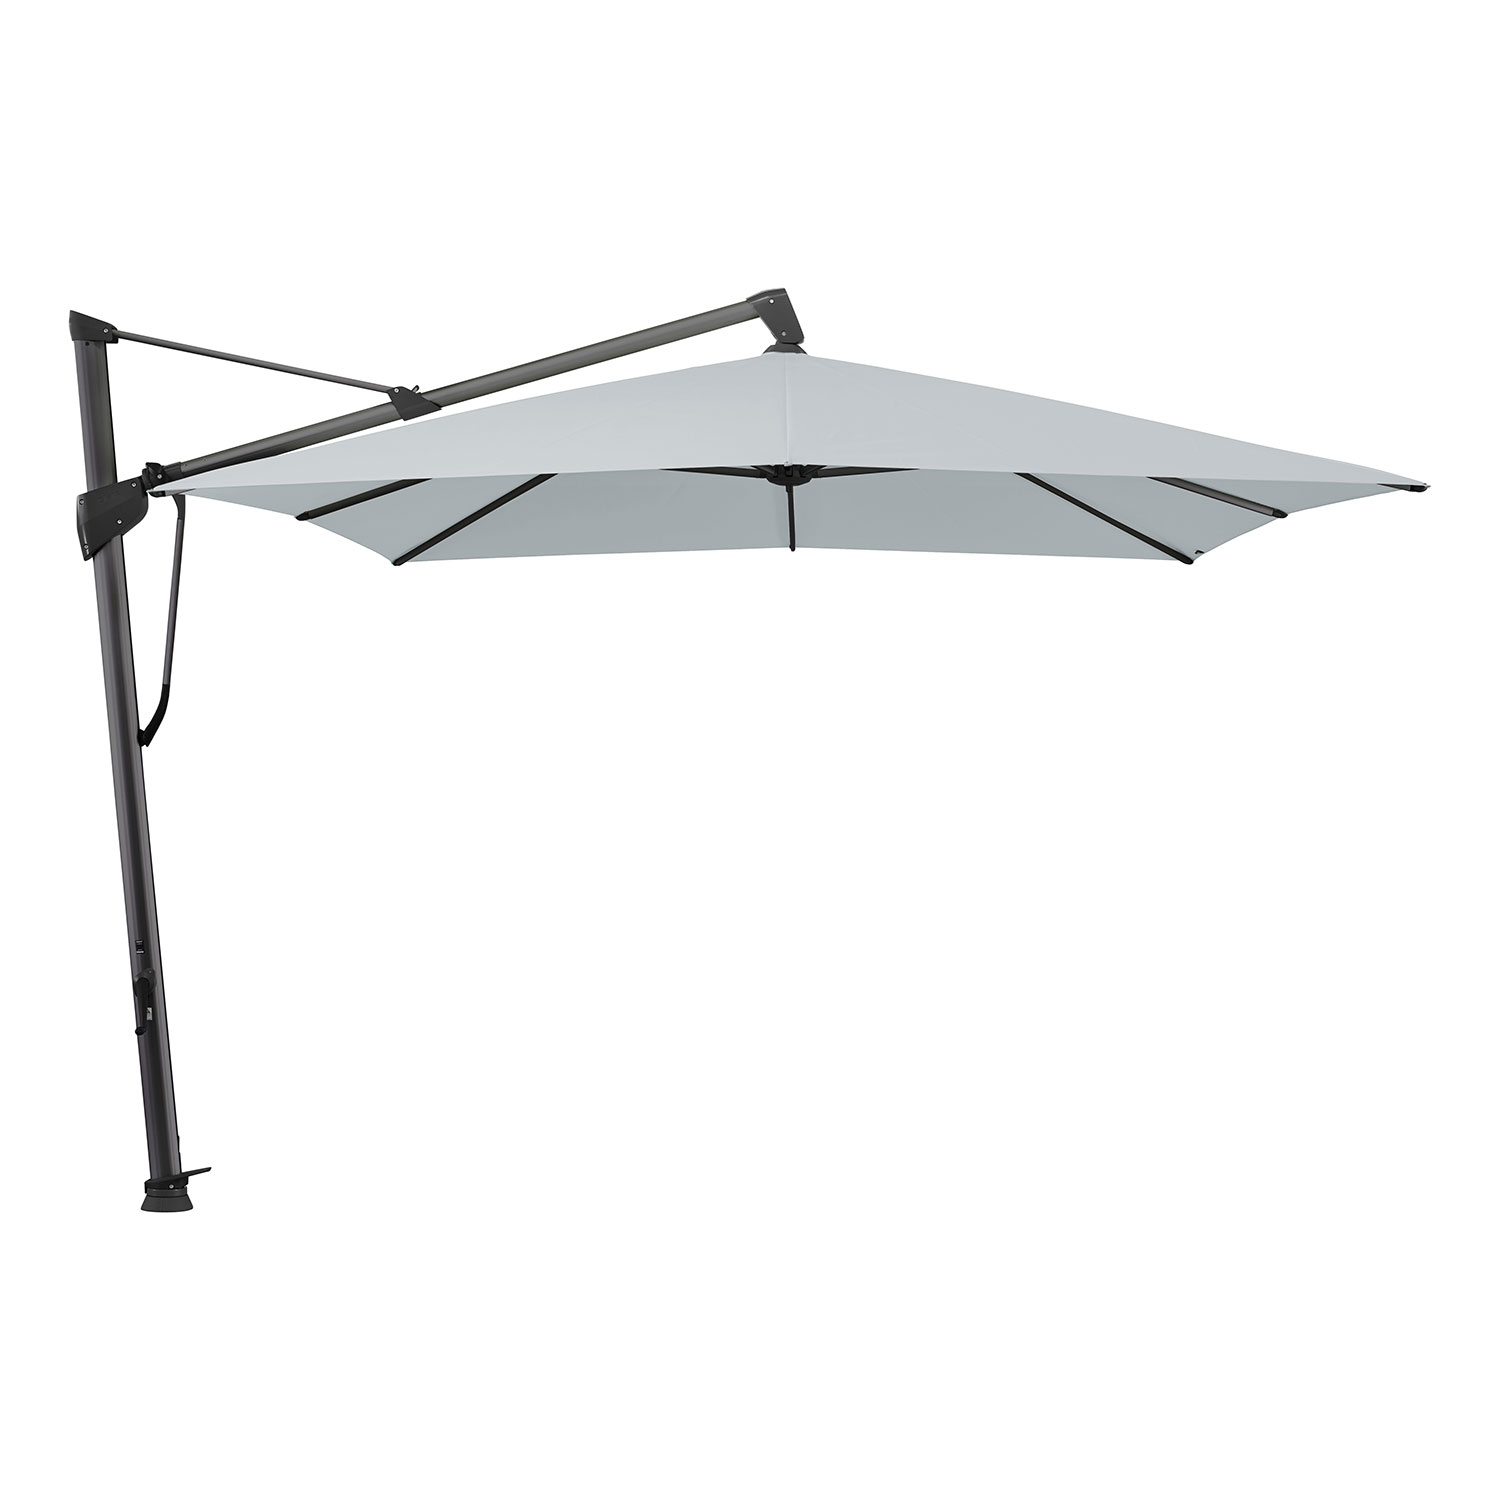 Glatz Sombrano S+ frihängande parasoll 400×300 cm kat.5 antracite alu / 665 chrome